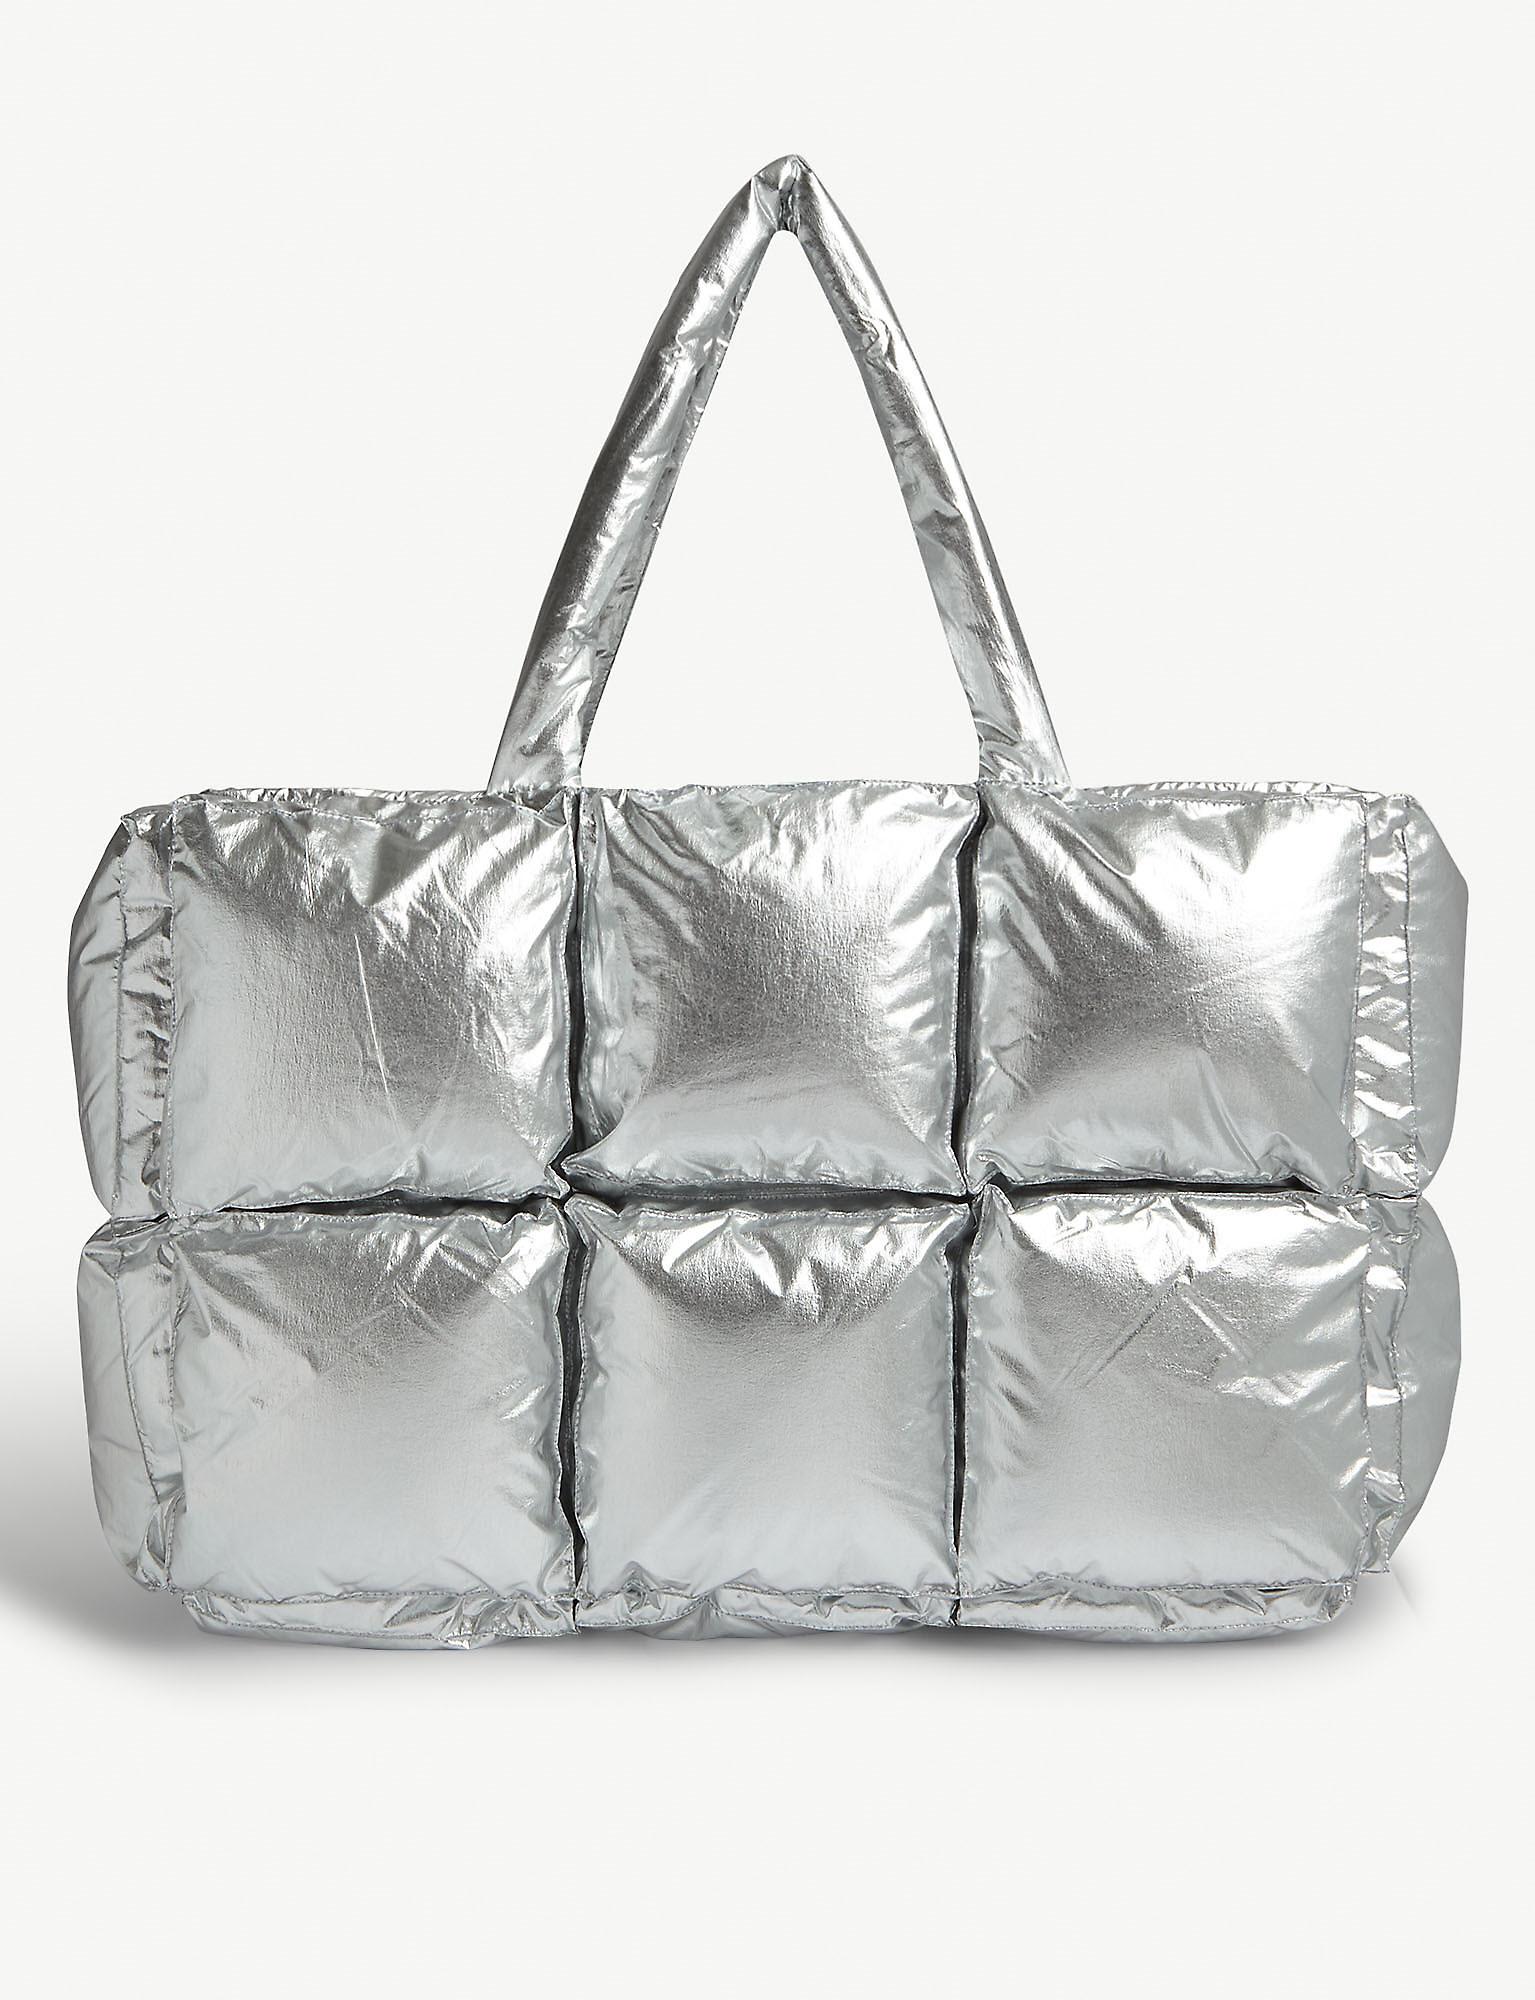 Off-White c/o Virgil Abloh Xl Puffer Tote Bag in Metallic | Lyst